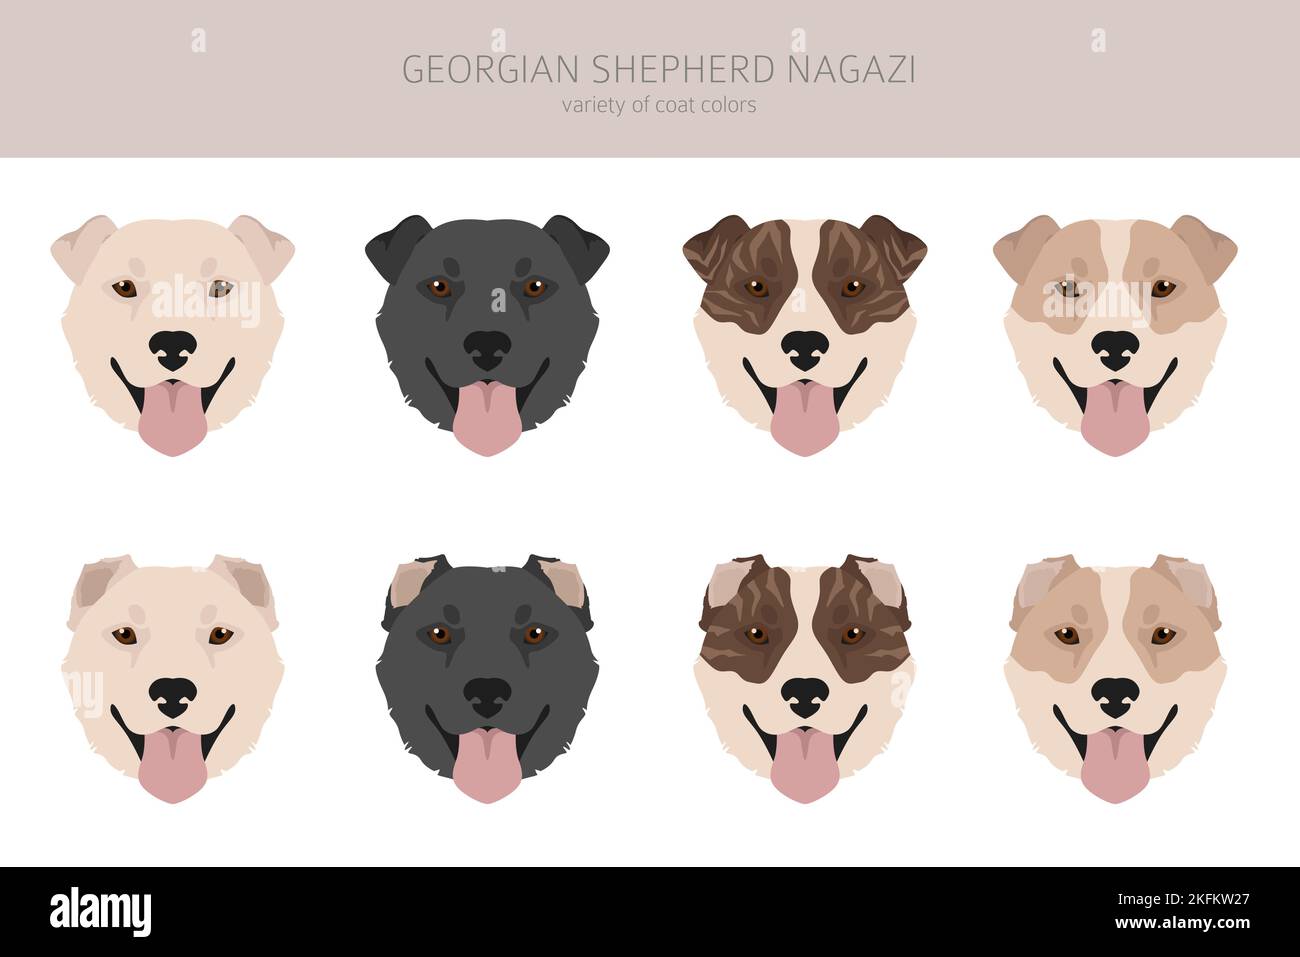 Georgian Shepherd Nagazi clipart. Different coat colors set.  Vector illustration Stock Vector